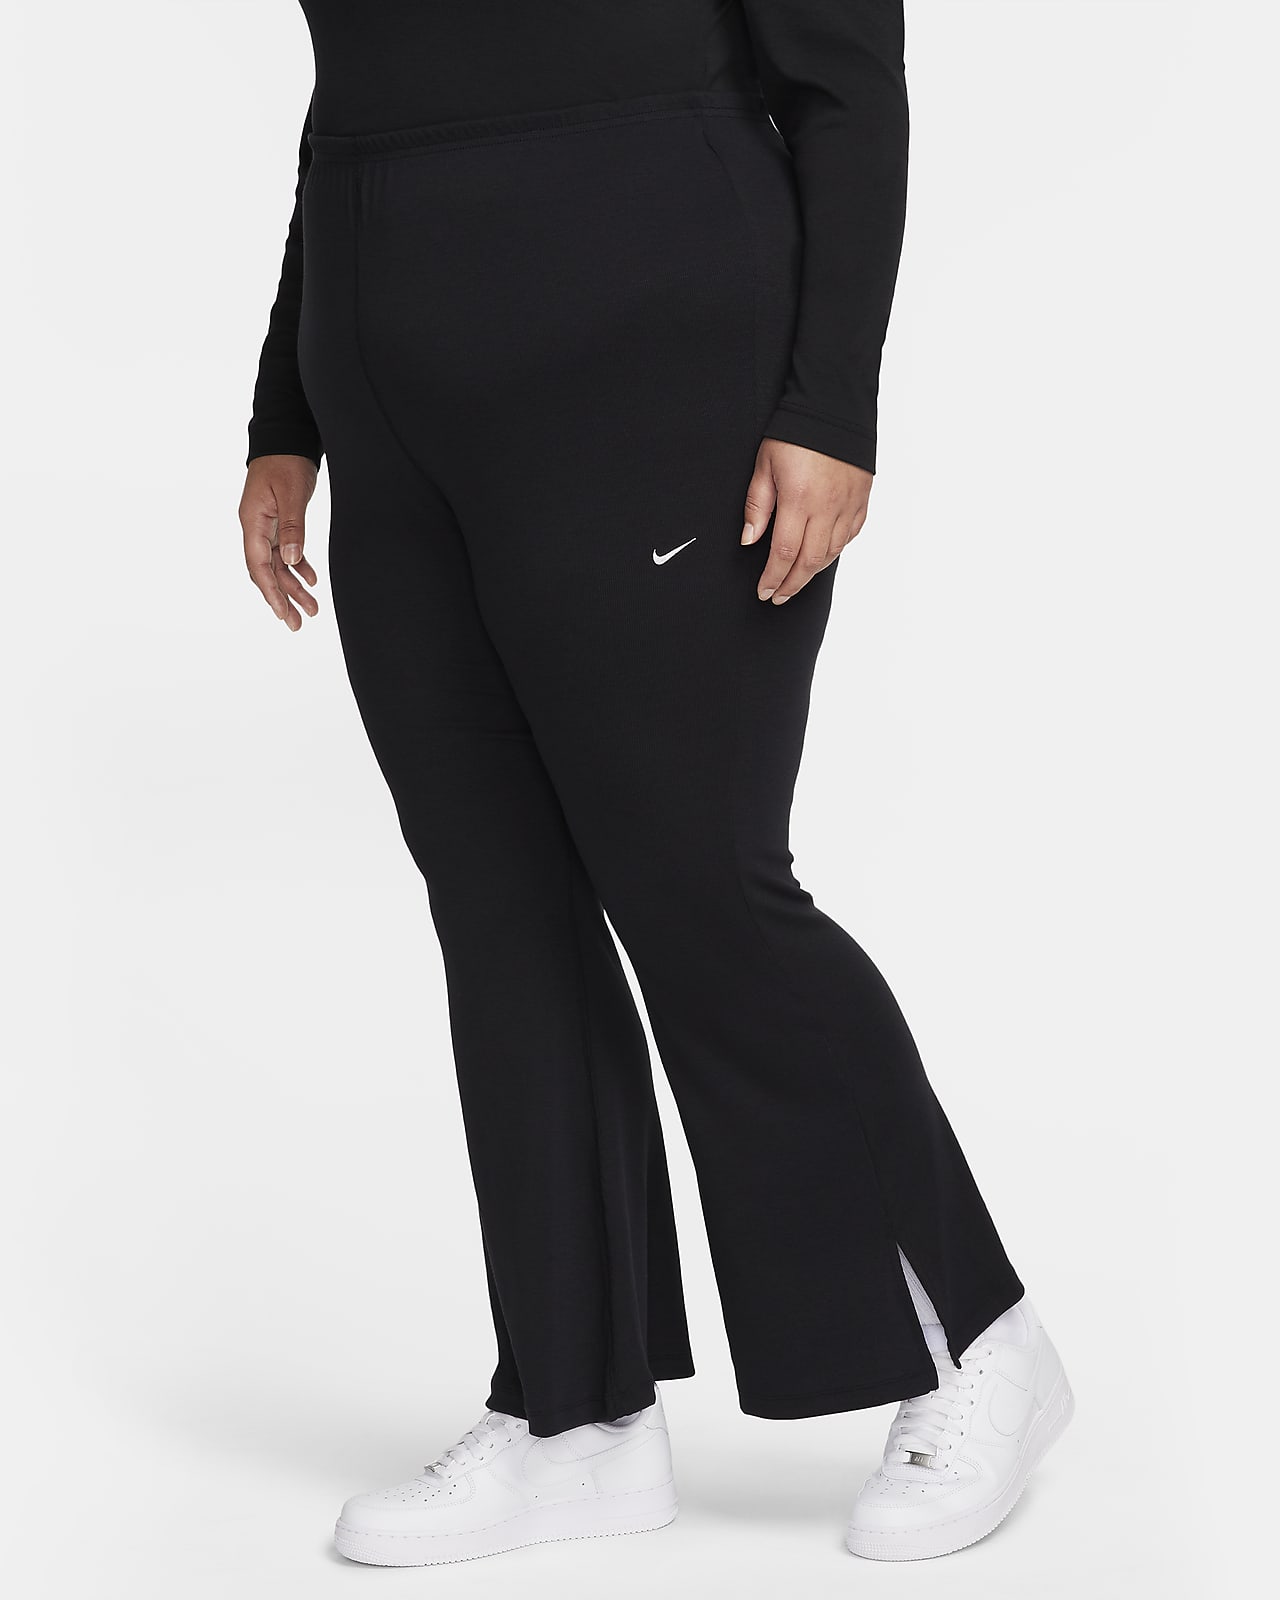 Leggings de cintura alta para mujer Nike Sportswear Club